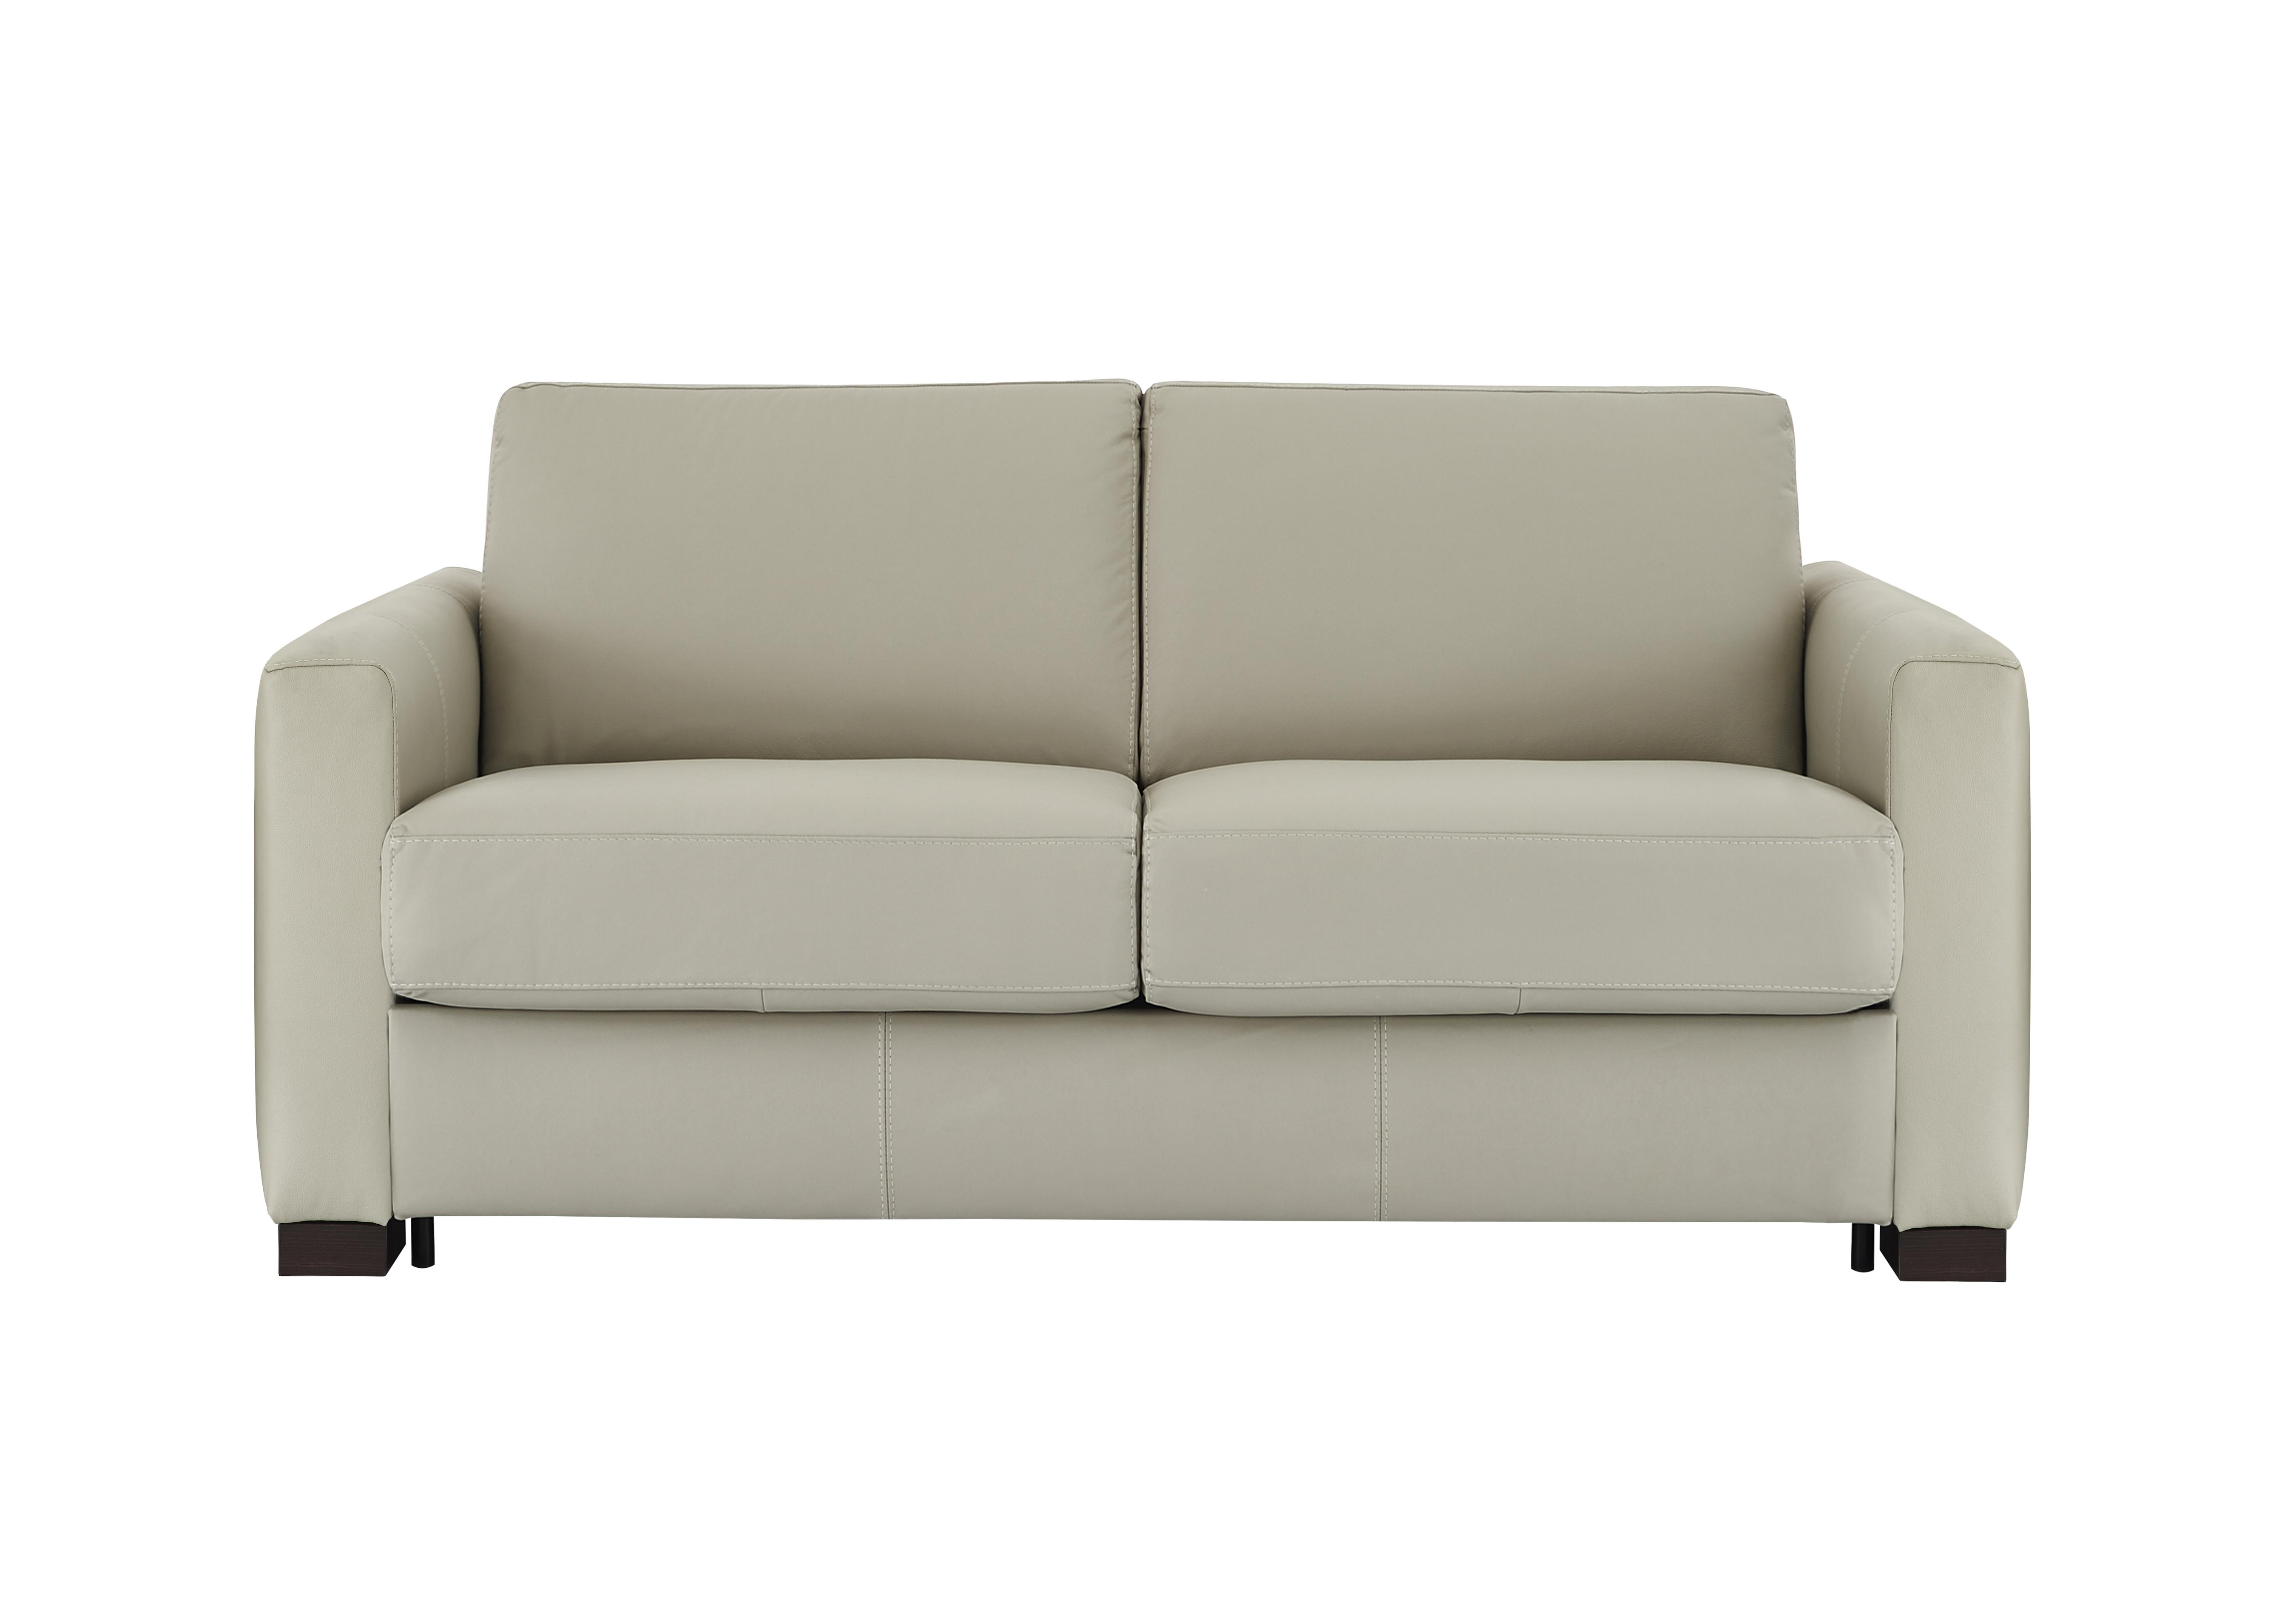 Alcova 2 Seater Leather Sofa Bed with Box Arms in Torello Tortora 328 on Furniture Village